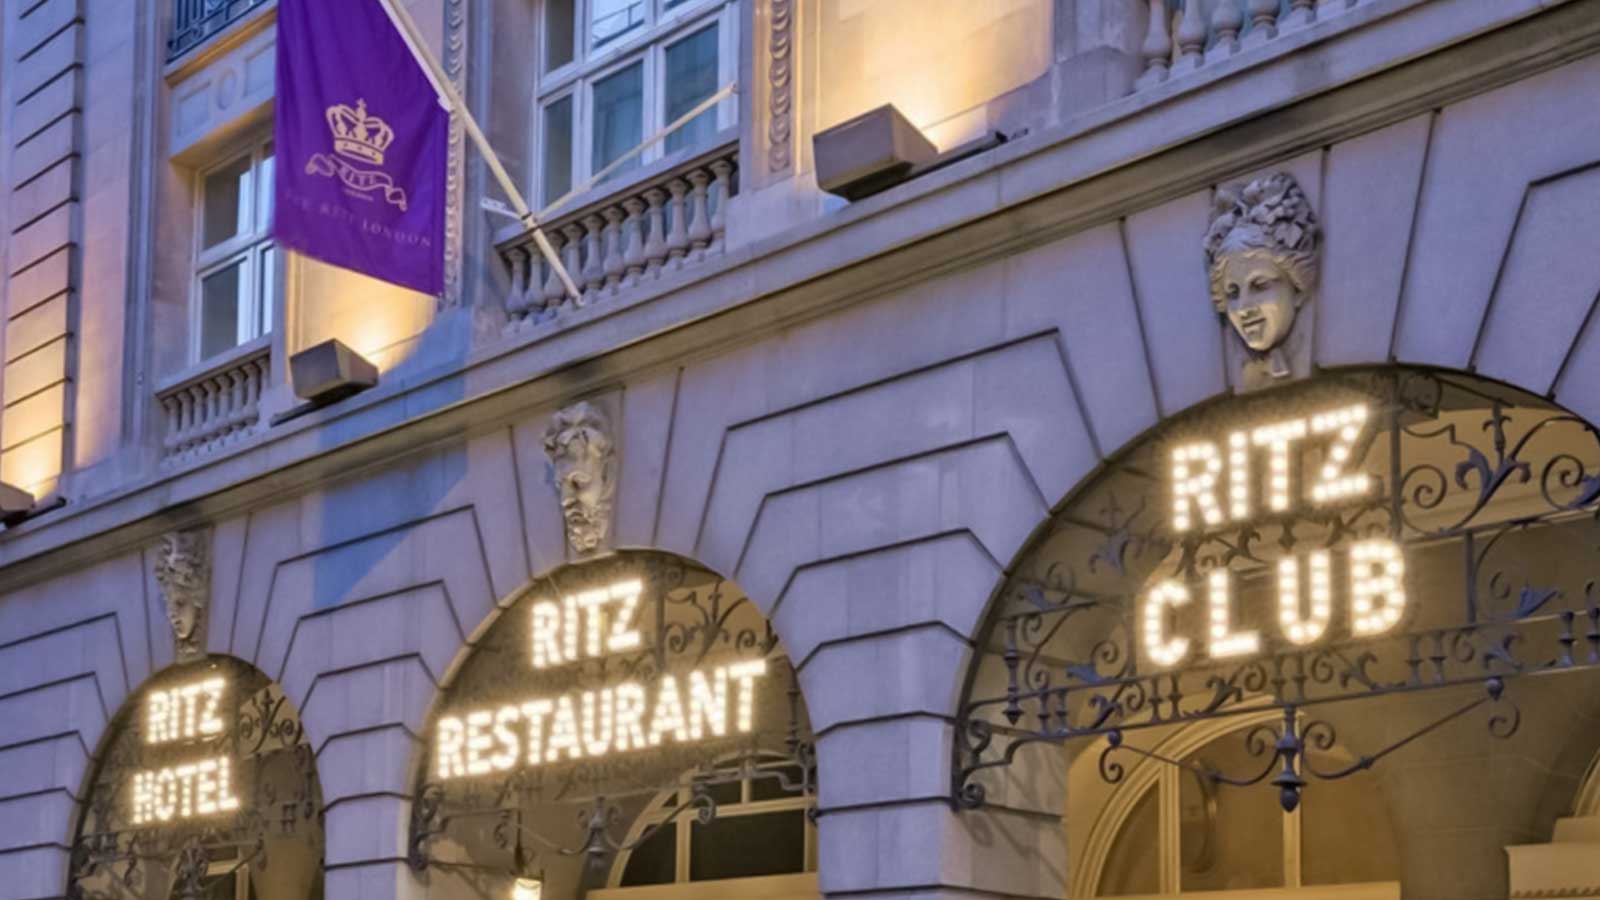 The Ritz Club